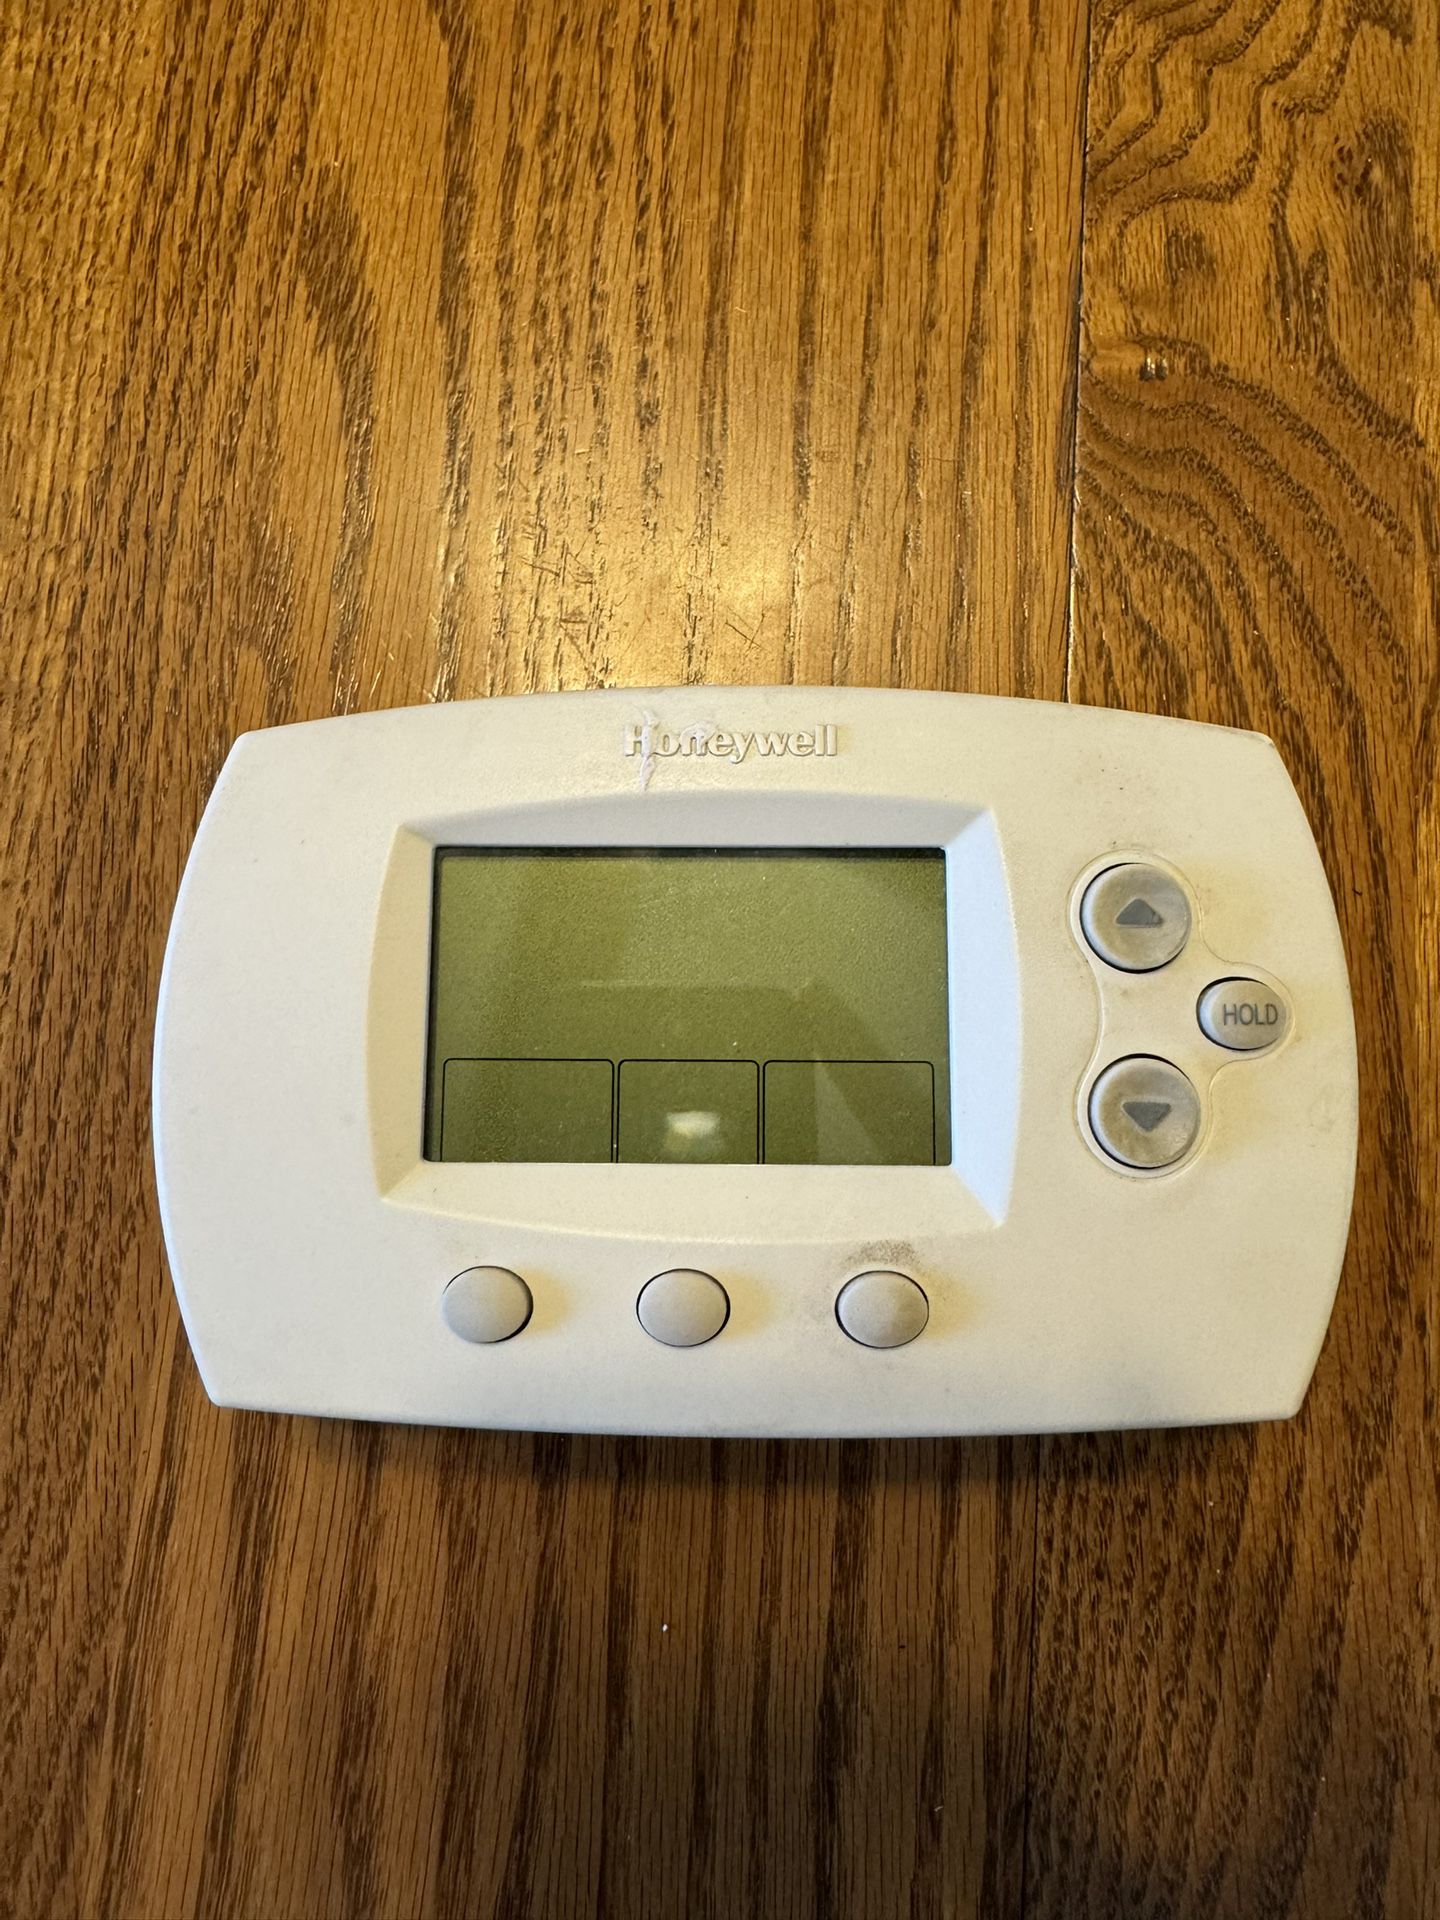 Honeywell FocusPro Programmable Thermostat